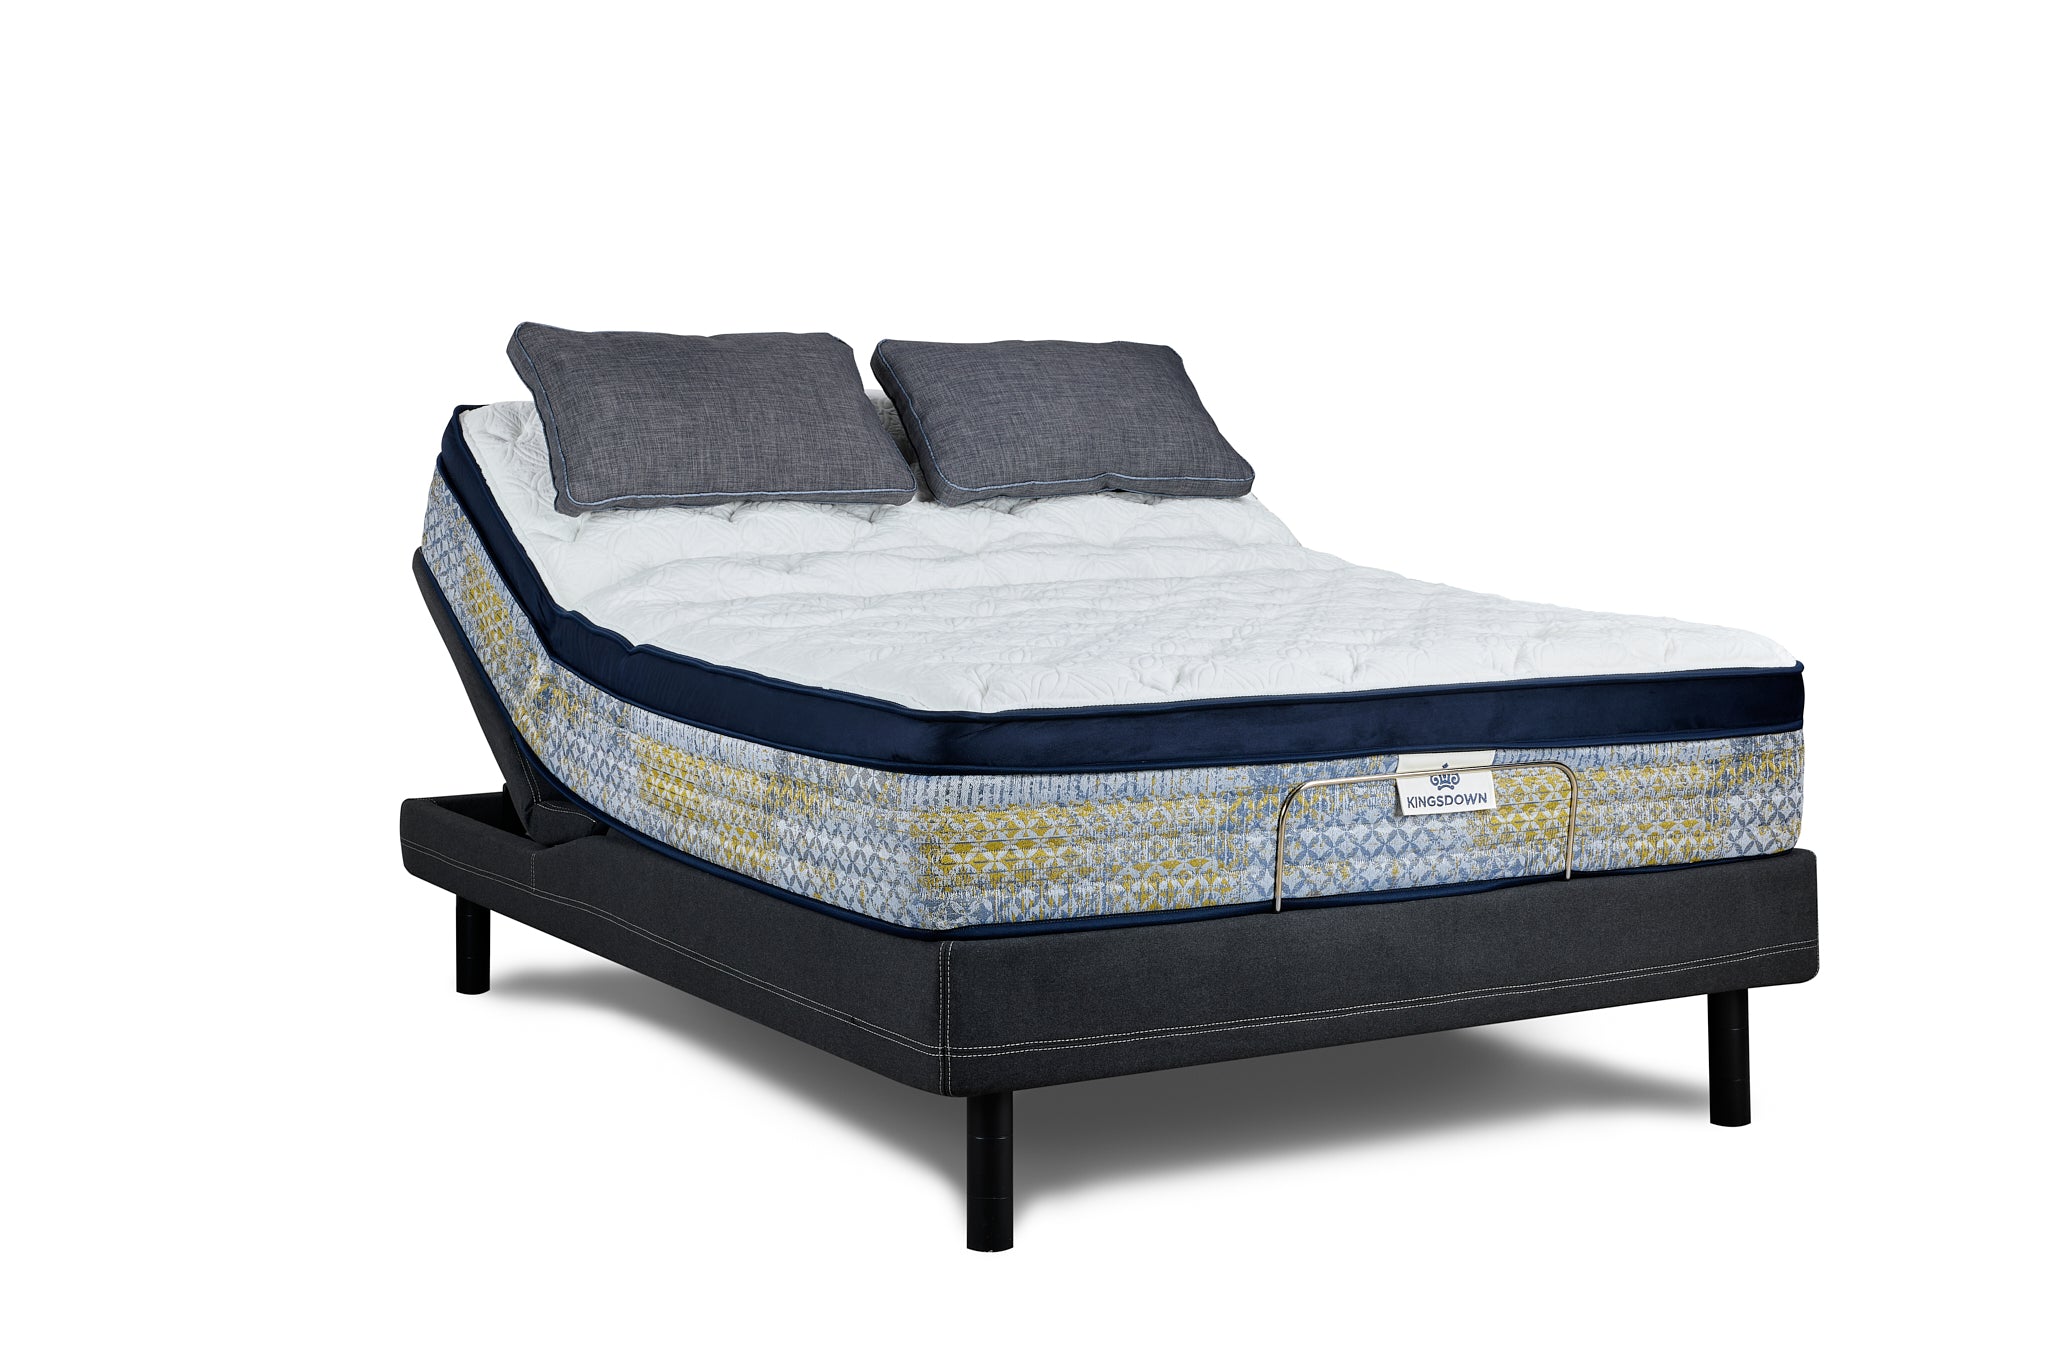 Serenity Series Queen Adjustable Bed Package